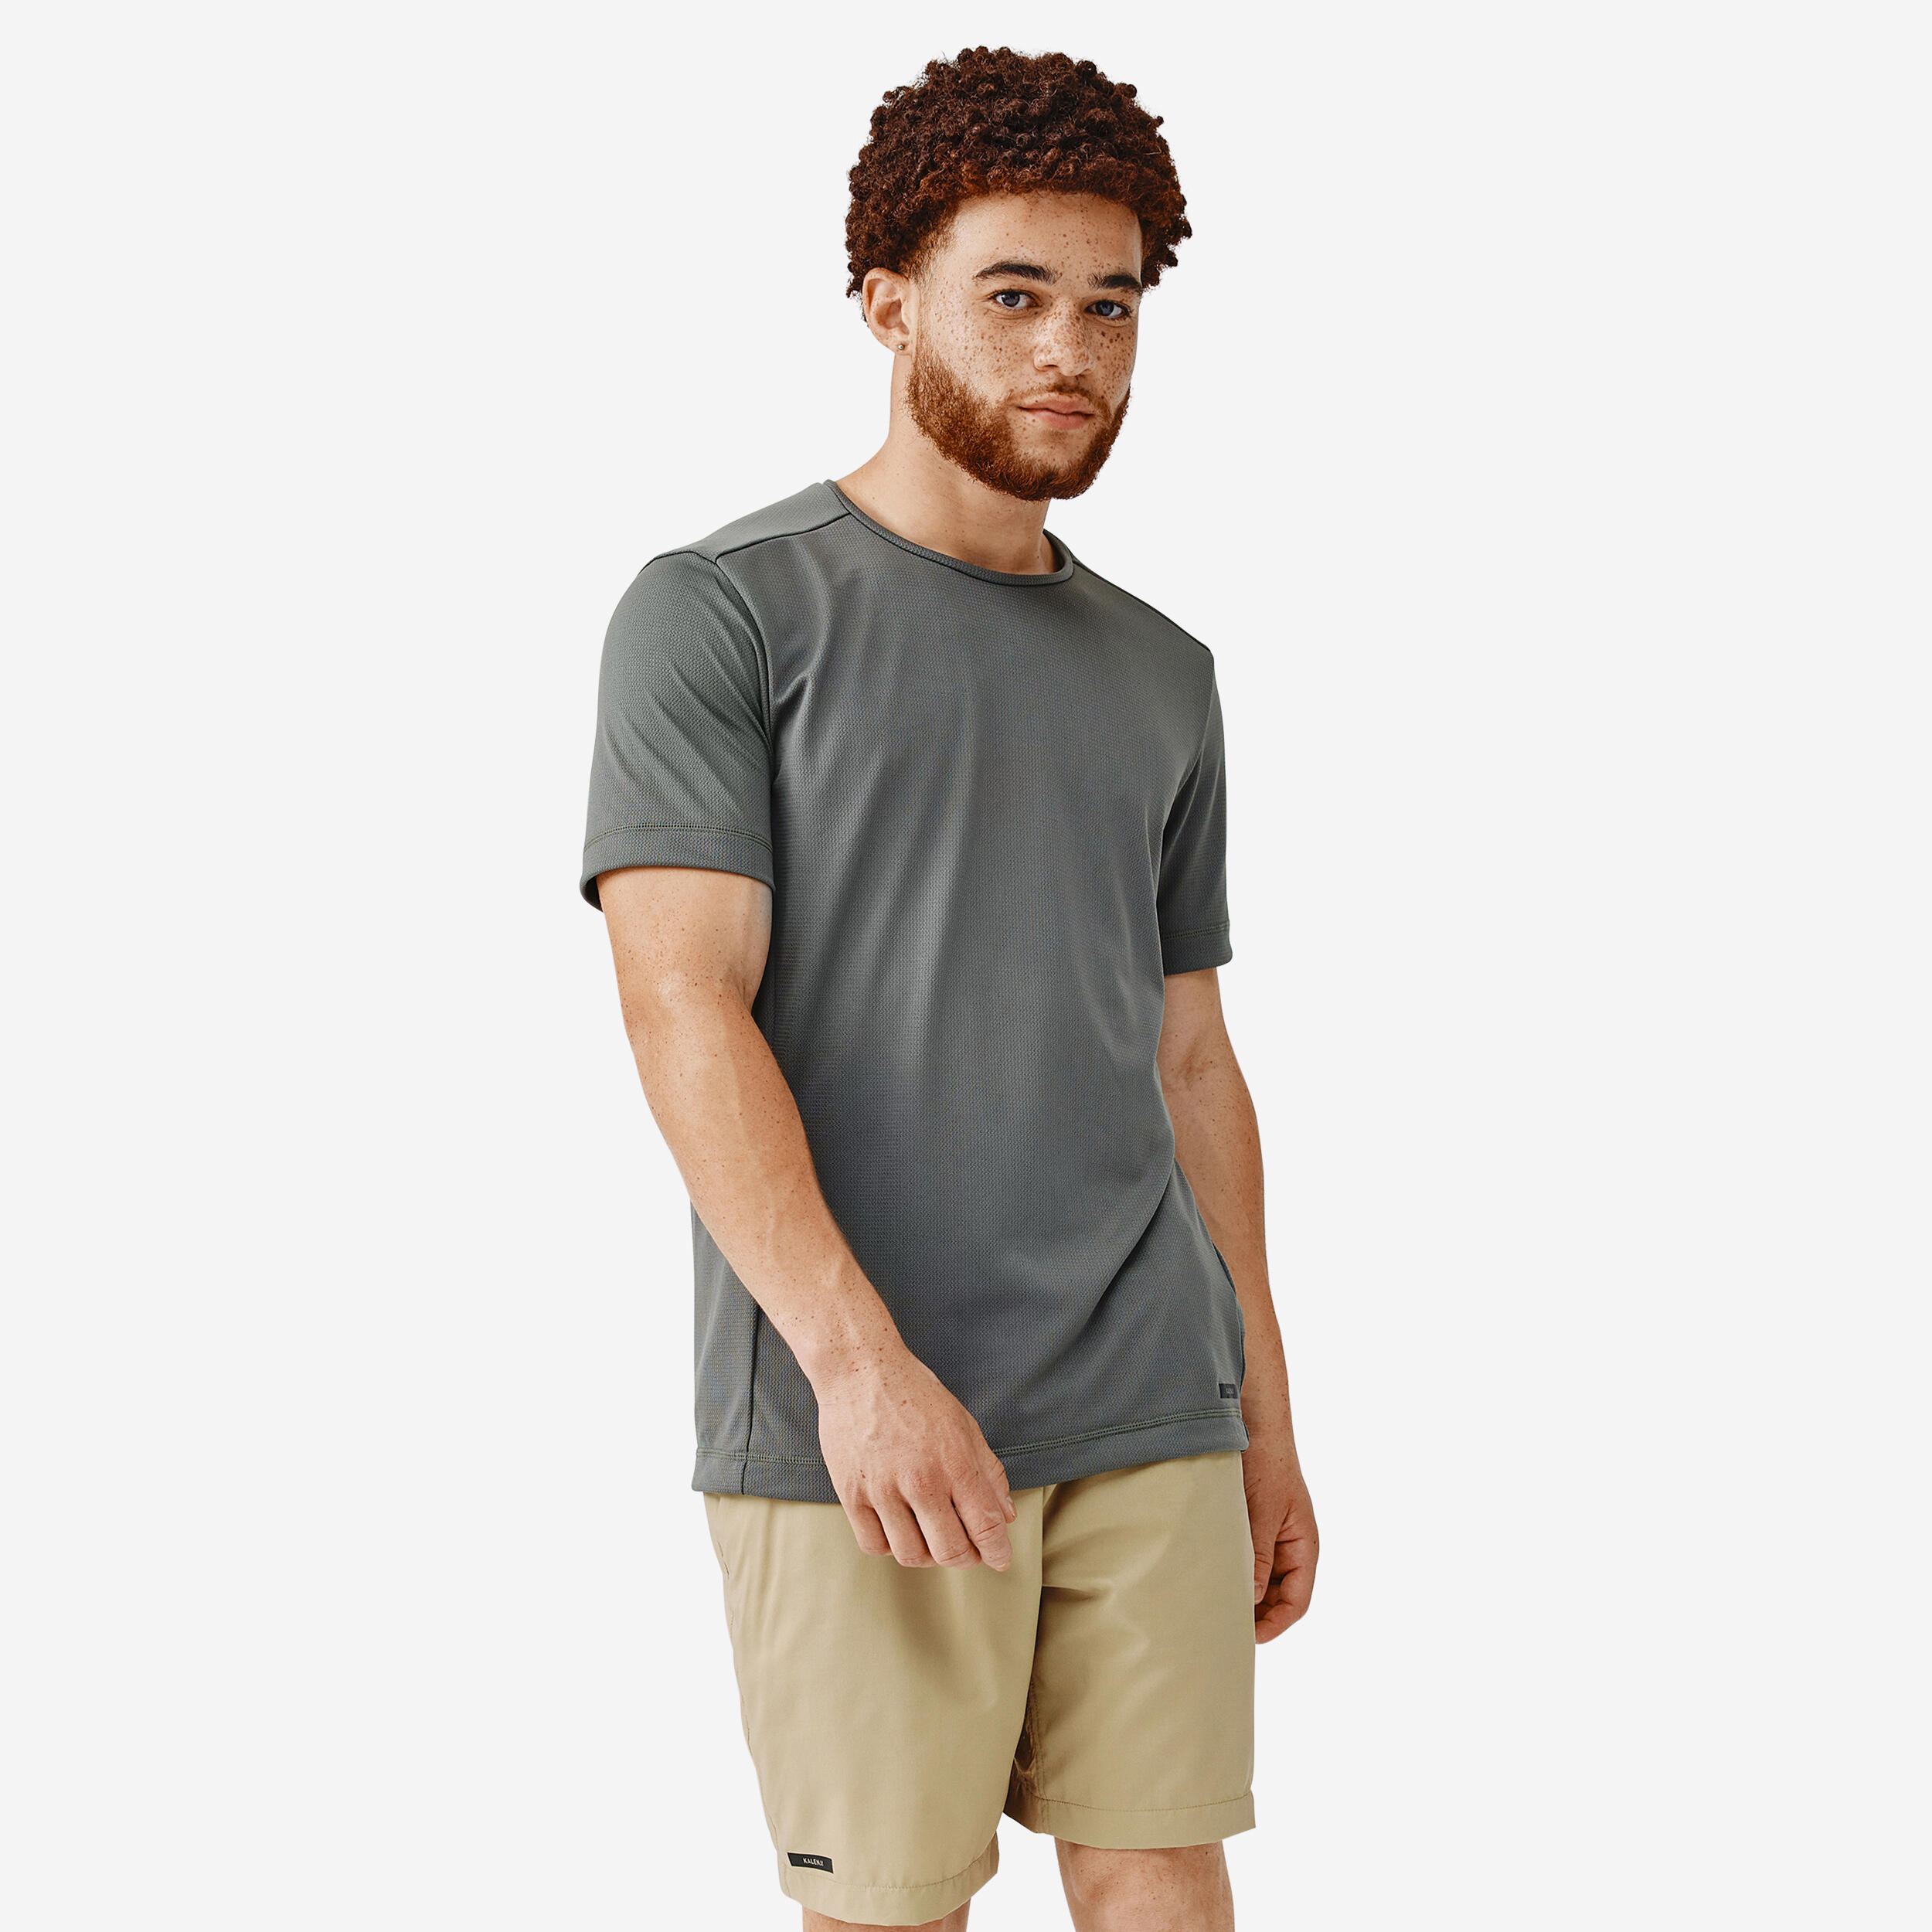 KALENJI Dry Men's Breathable Running T-Shirt - Grey Khaki